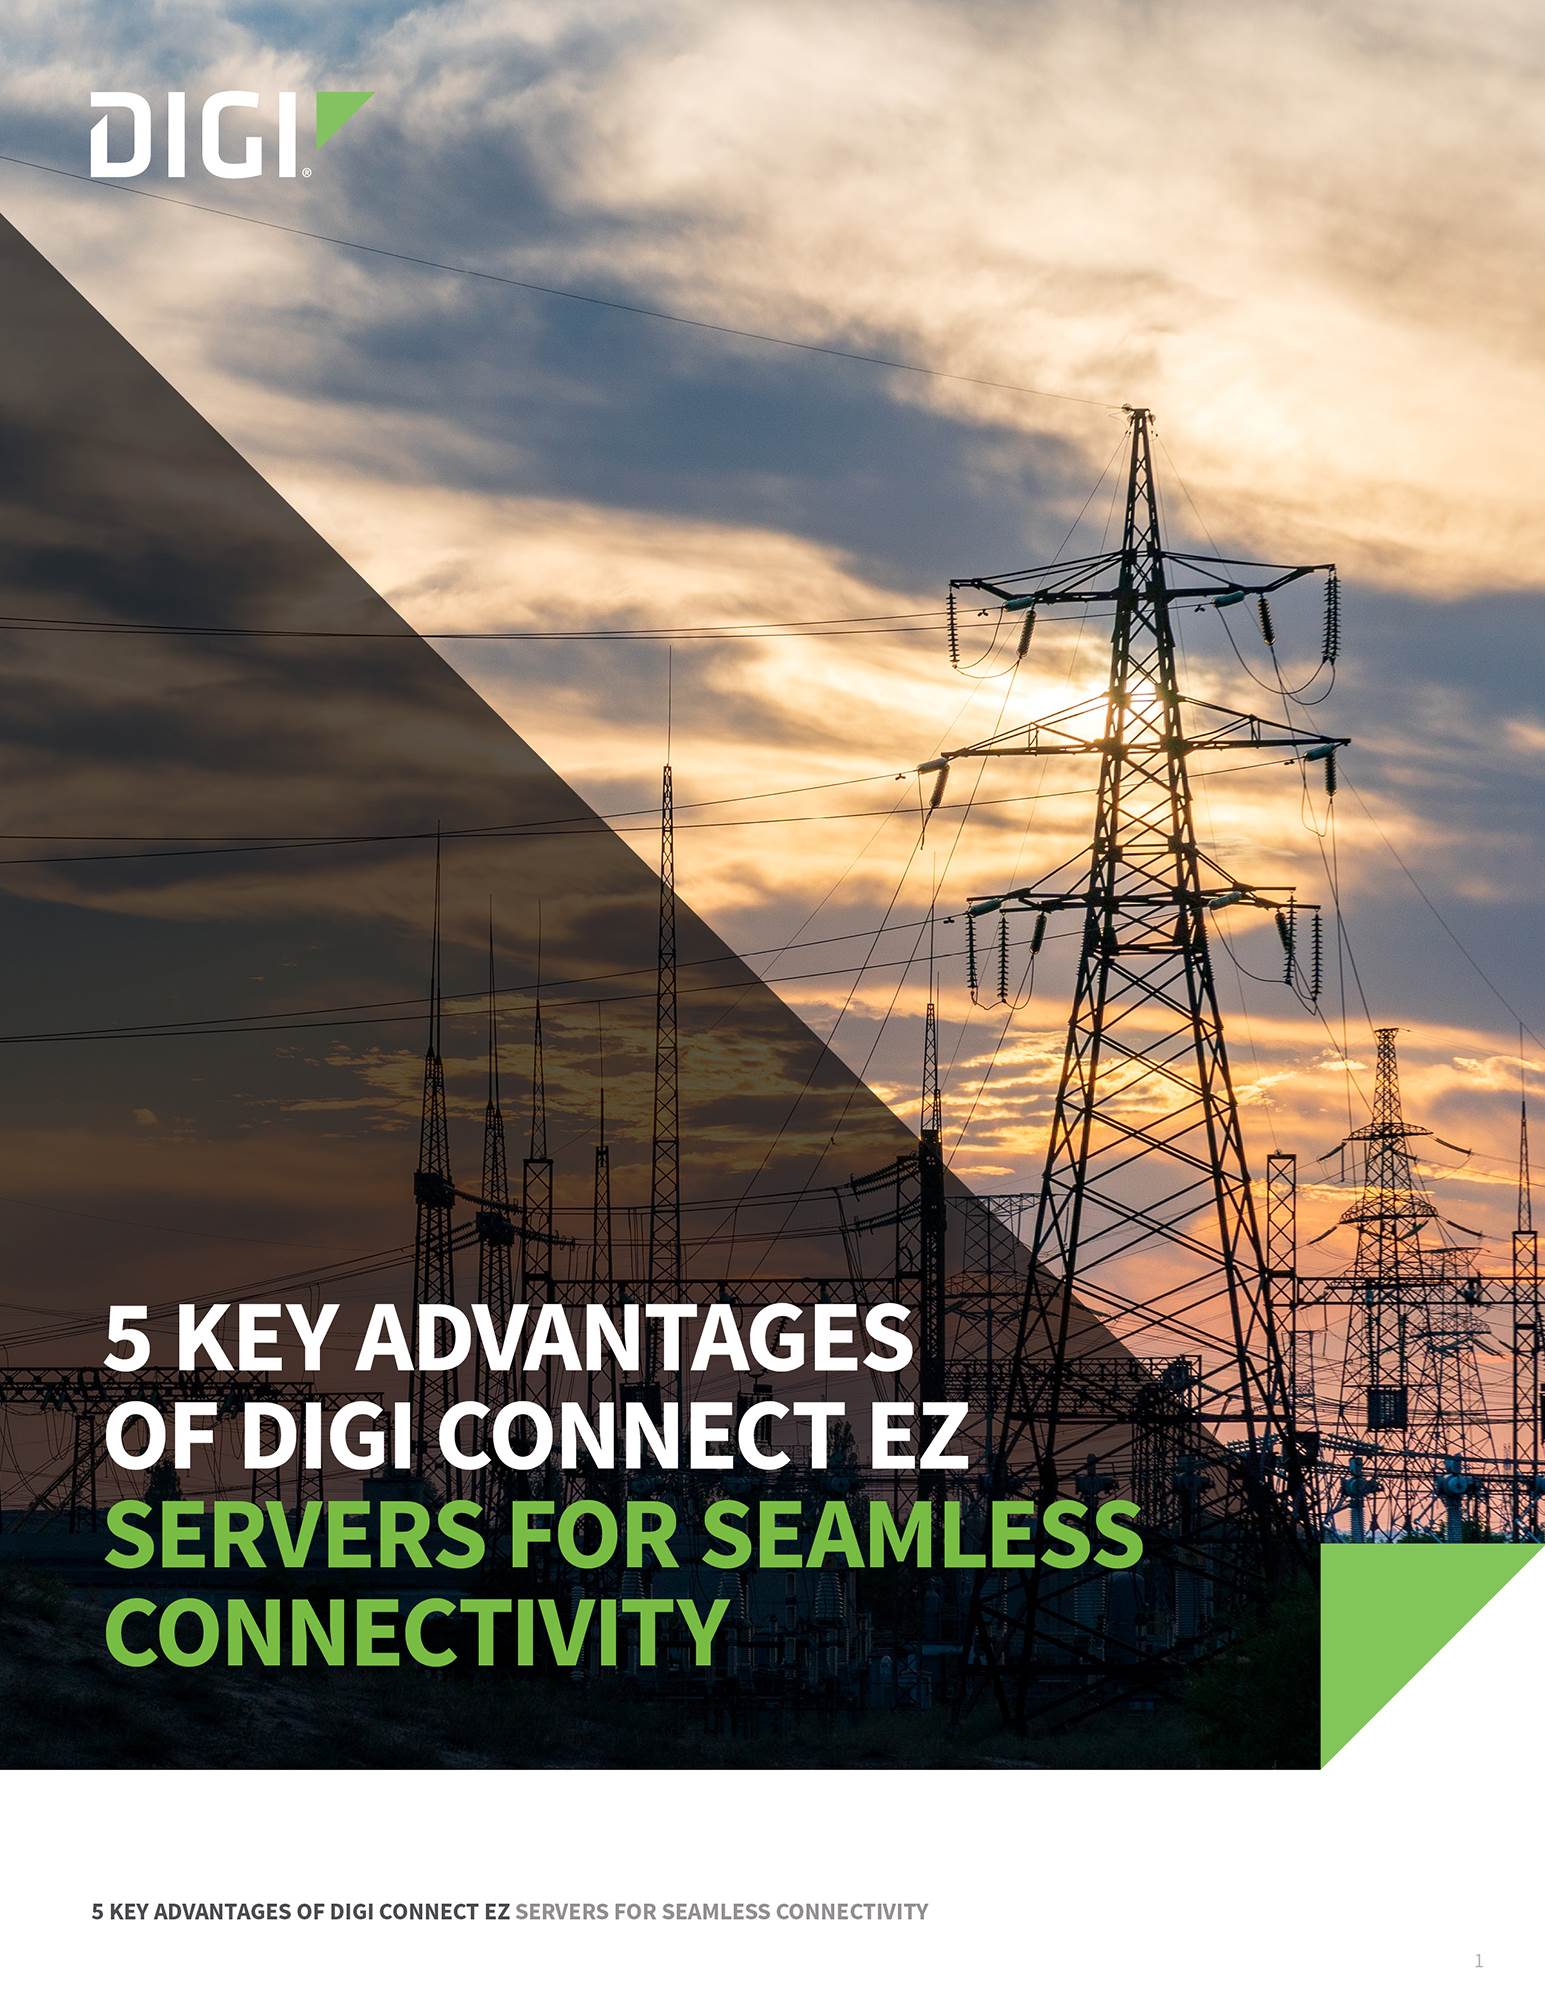 Digi Connect EZ 服务器实现无缝连接的 5 大优势